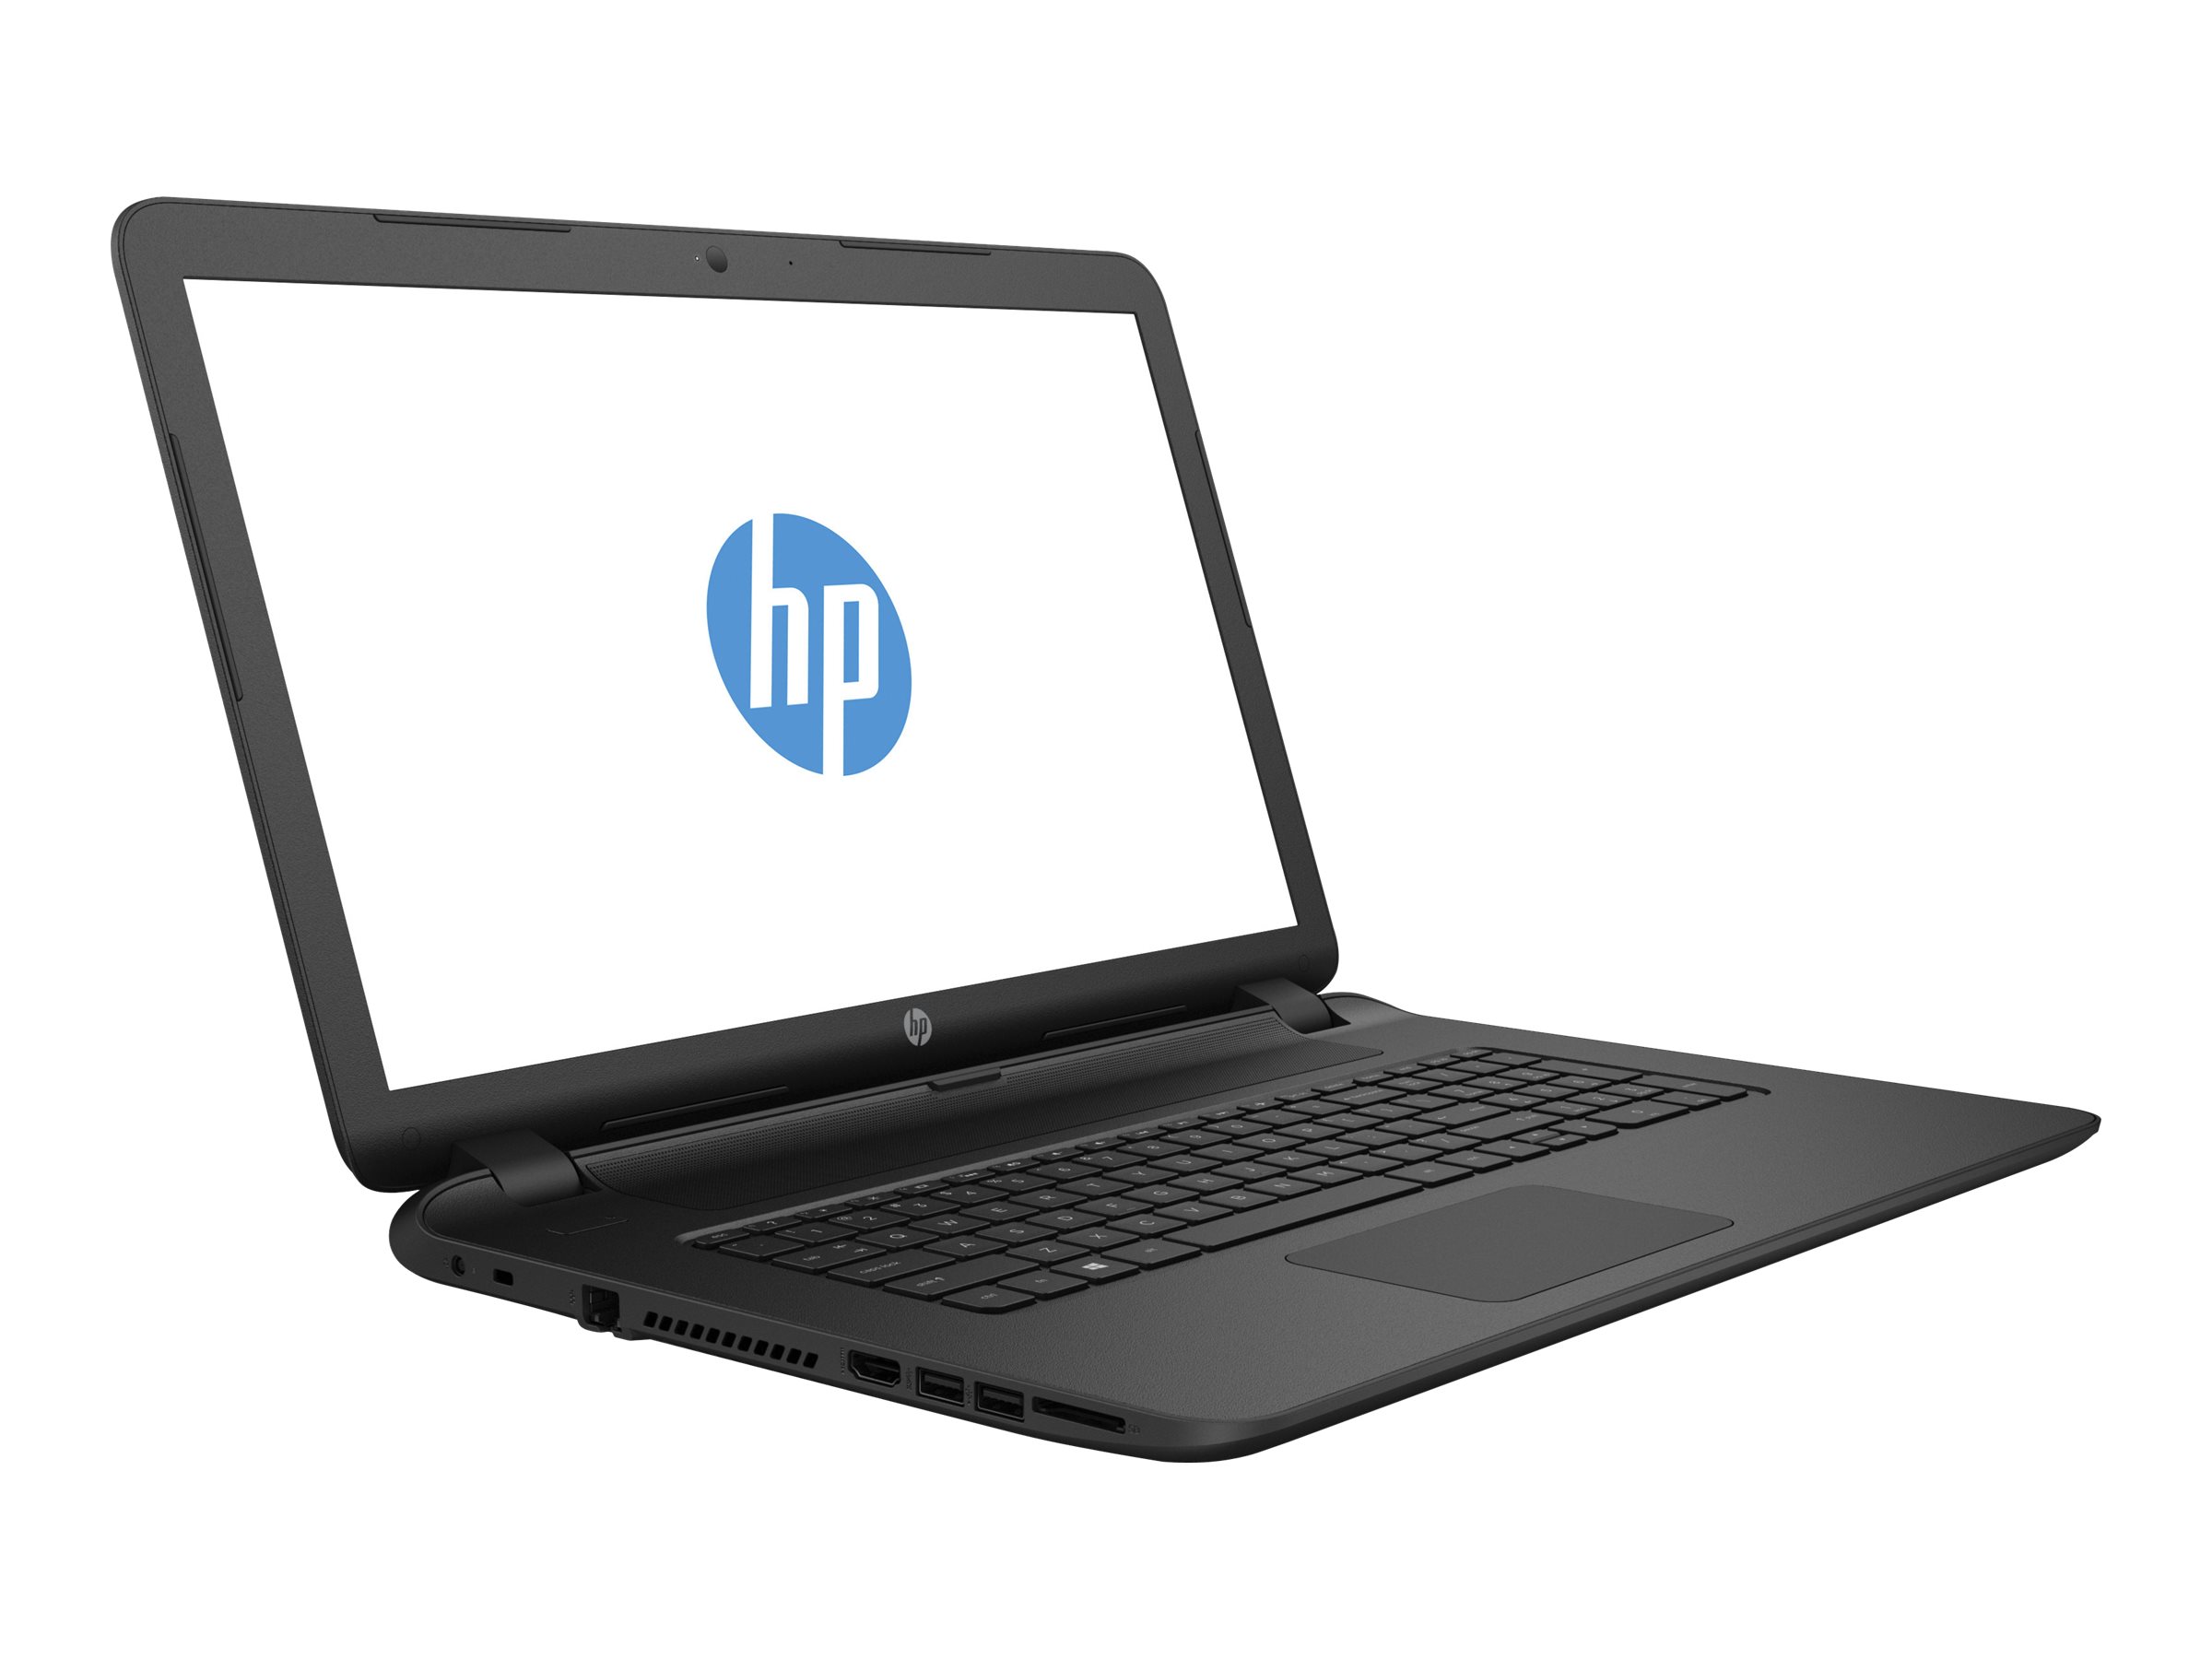 HP Laptop 17-p121wm - AMD A6 - 6310 / up to 2.4 GHz - Win 10 Home 64-bit - Radeon R4 - 4 GB RAM - 500 GB HDD - DVD SuperMulti - 17.3" 1600 x 900 (HD+) - HP textured linear pattern in black - kbd: US - image 3 of 5